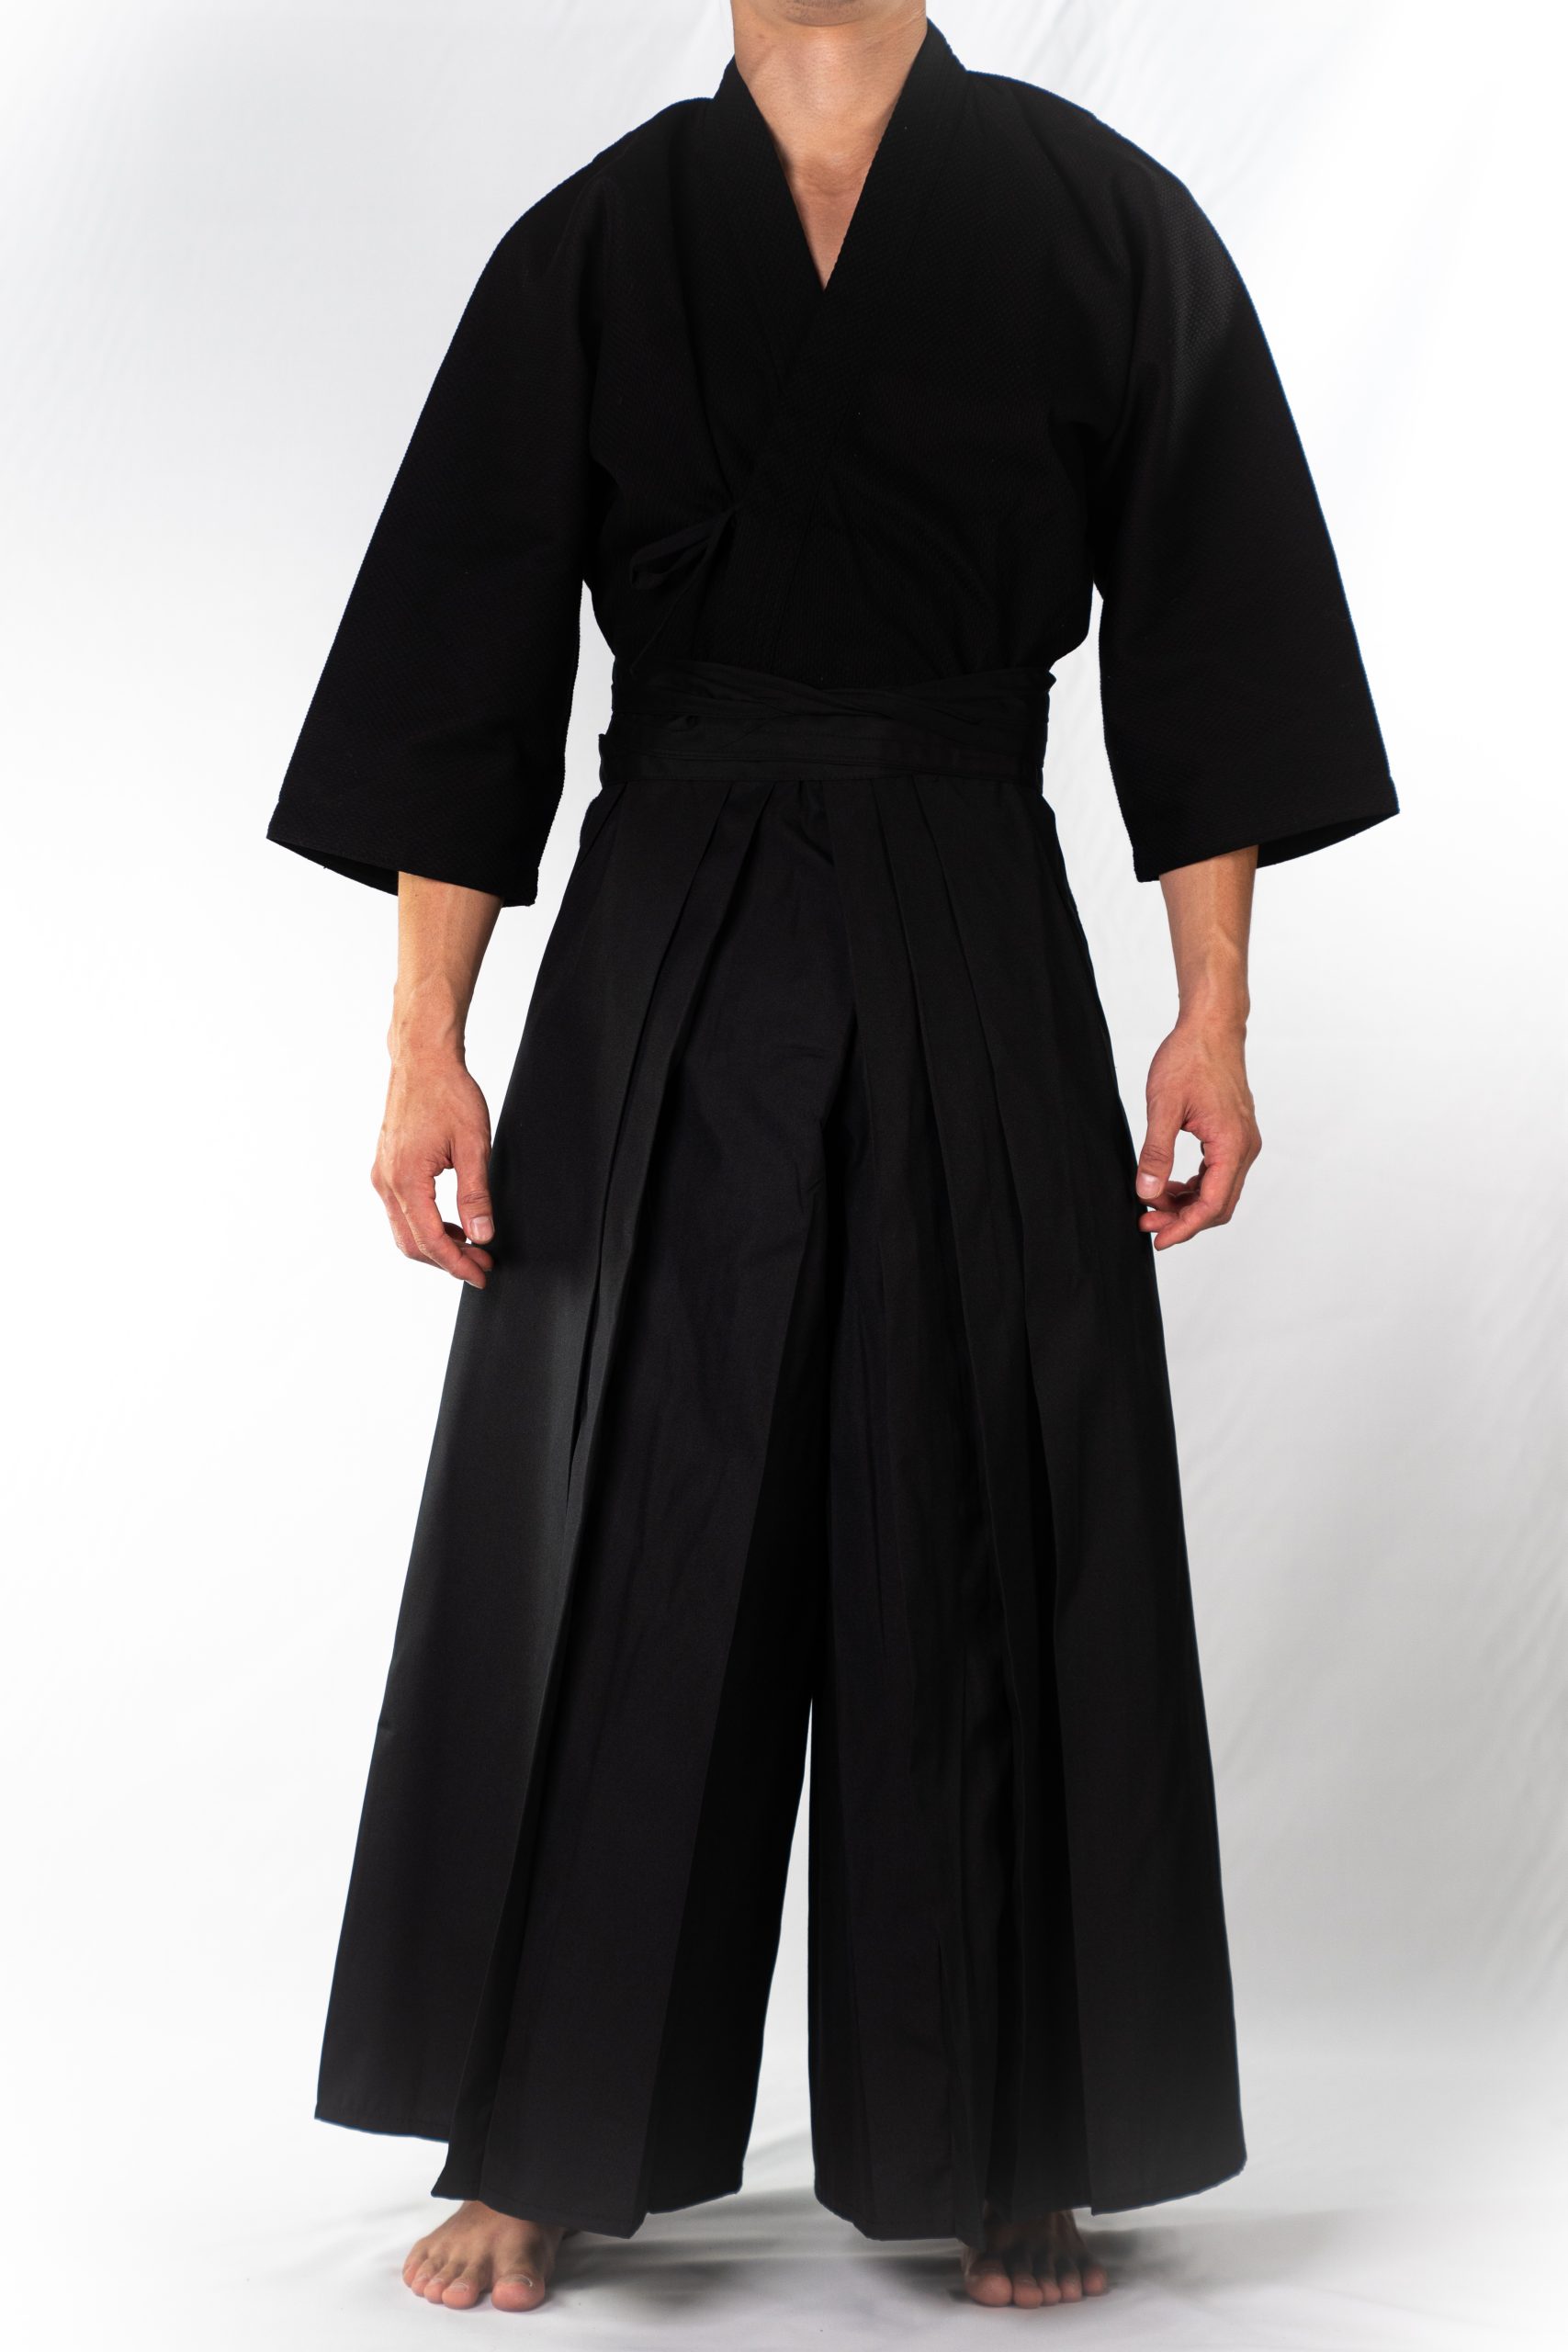 Men's Traditional Hakama Pants. Black. | Pac West Kimono